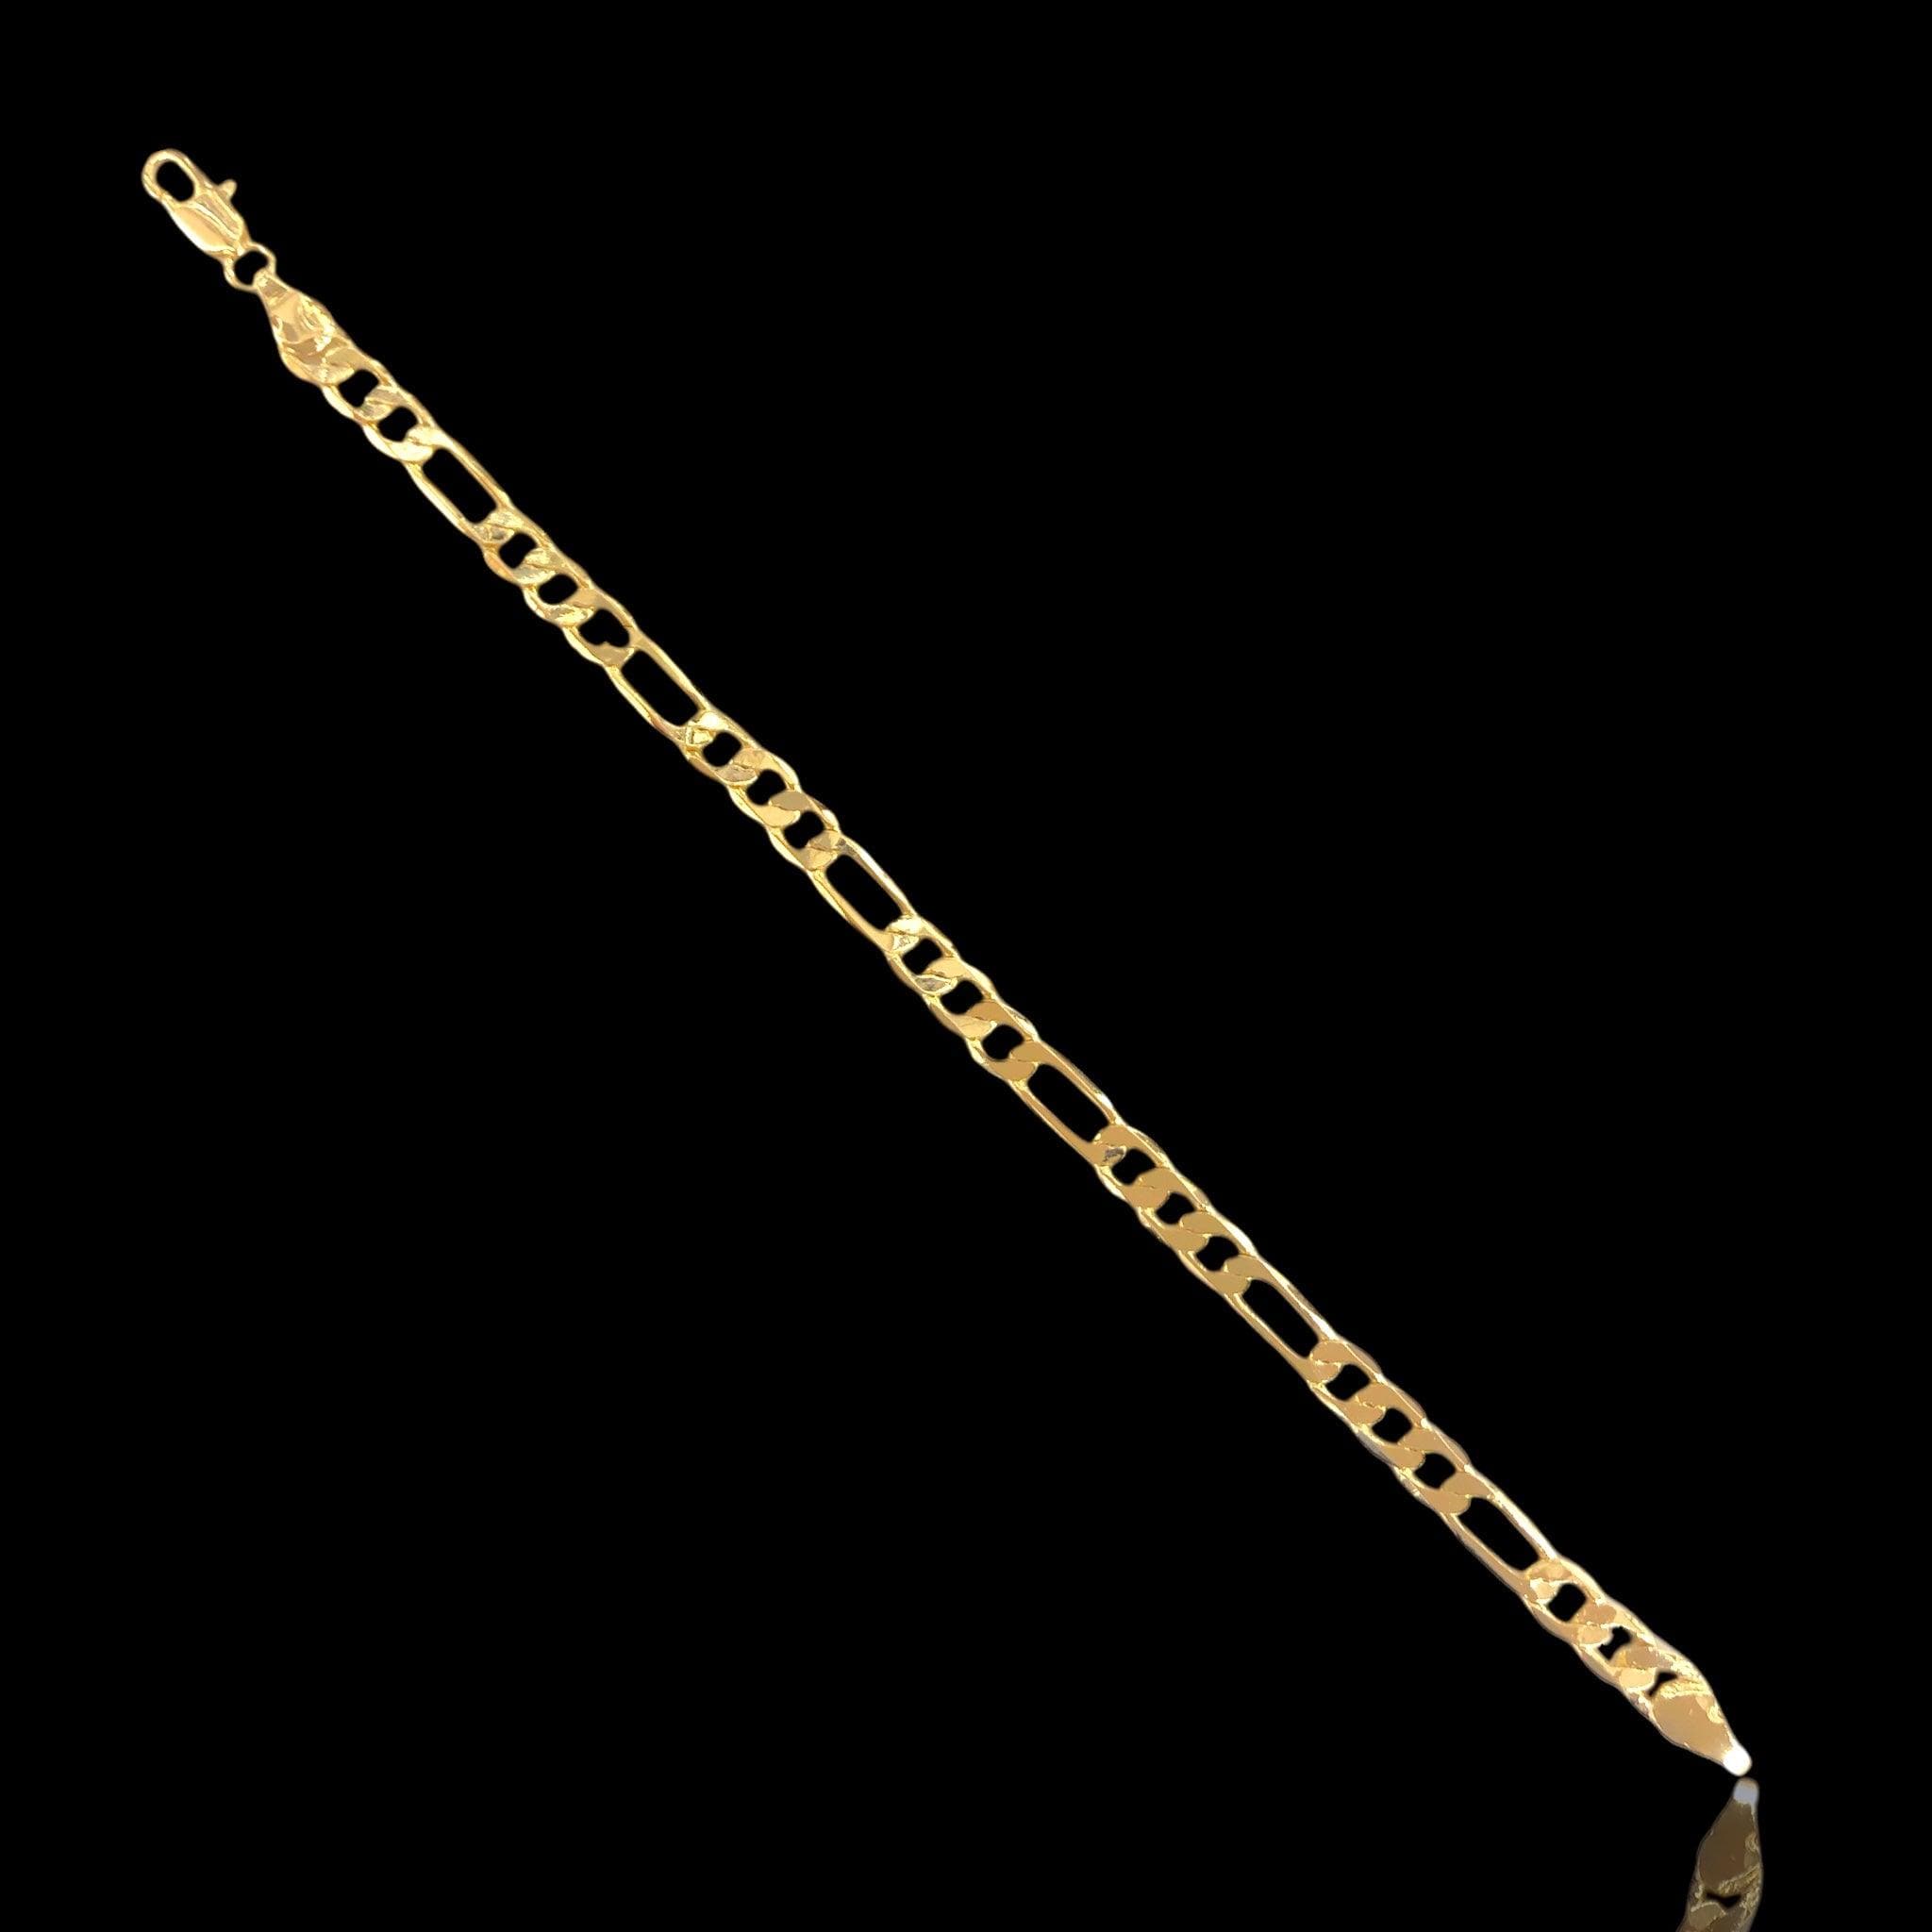 18K Gold Filled Figaro Bracelet- kuania oro laminado